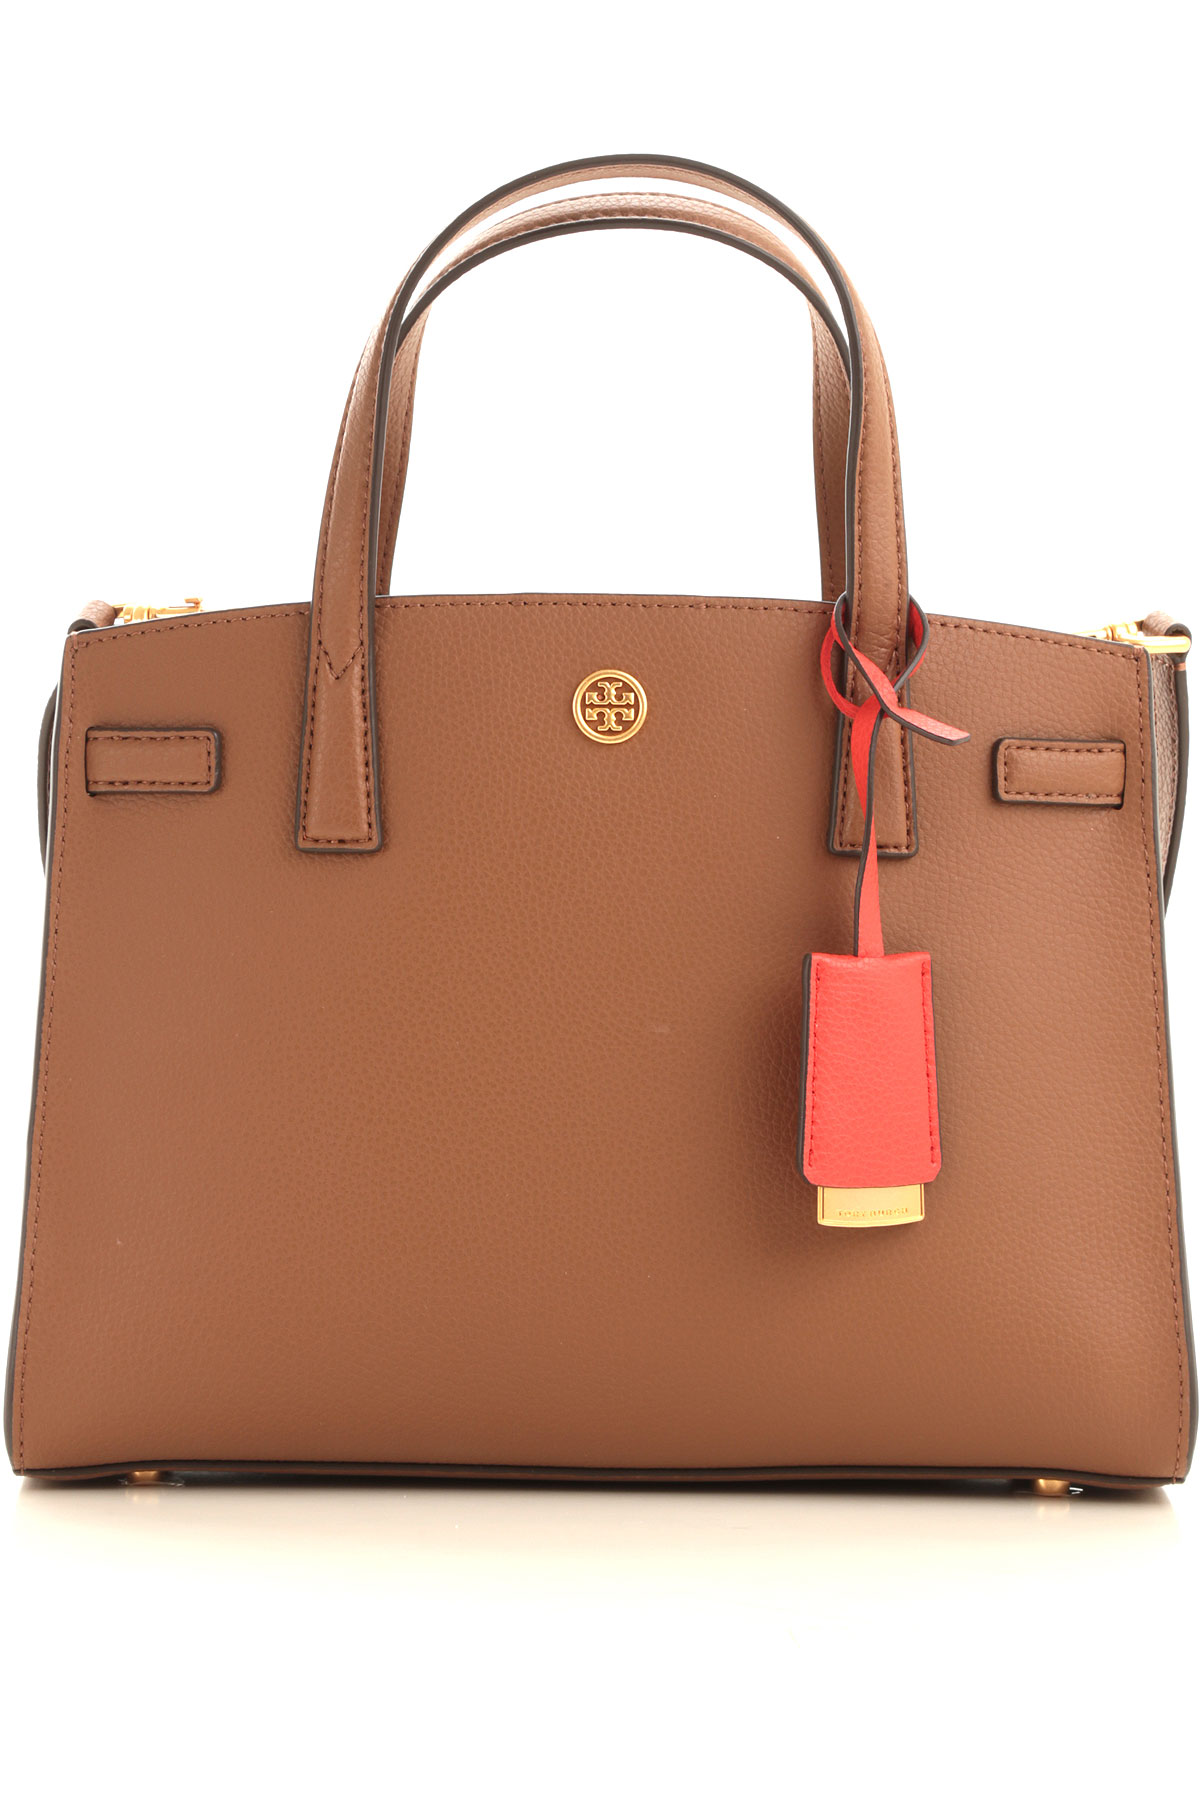 Handbags Tory Burch, Style code: 73625-909-